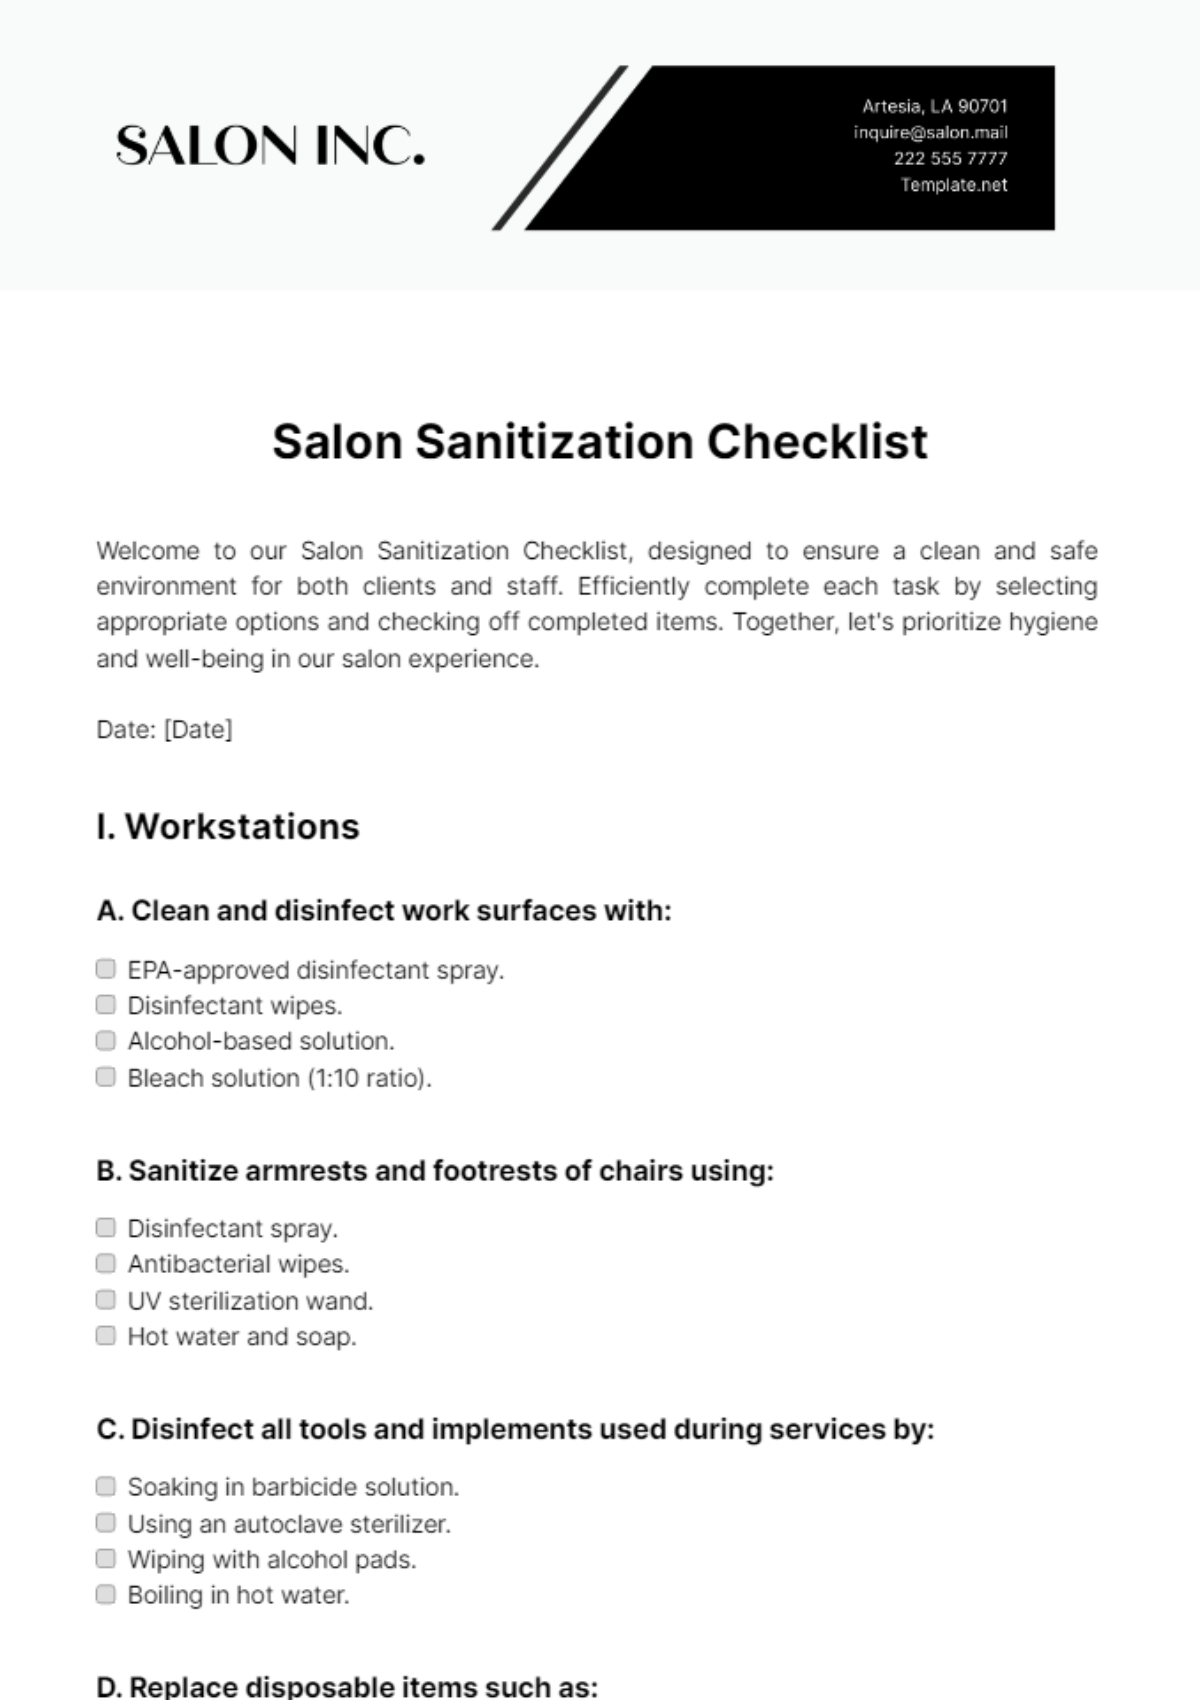 Salon Sanitization Checklist Template